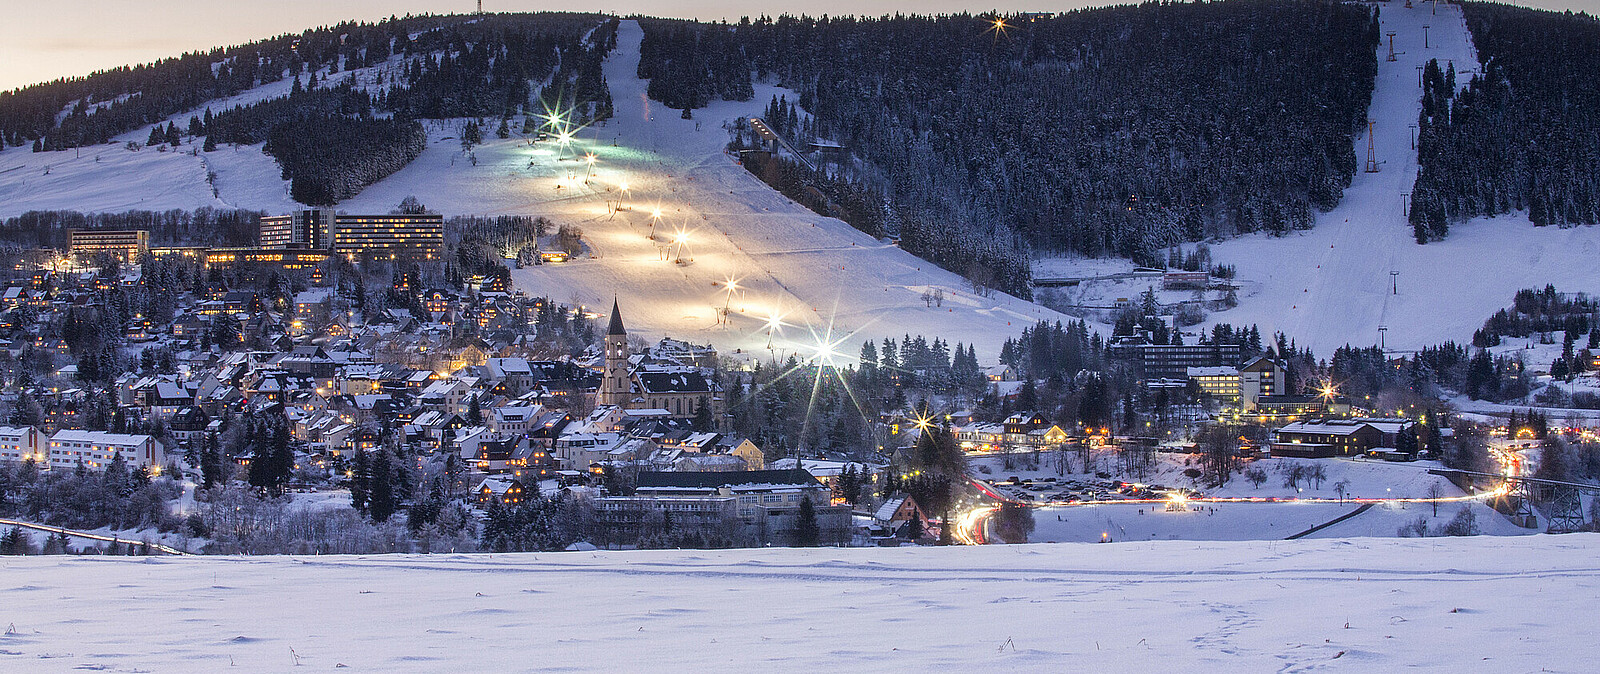 Kurort Oberwiesenthal im Erzgebirge mit beleuchtetem Skihang